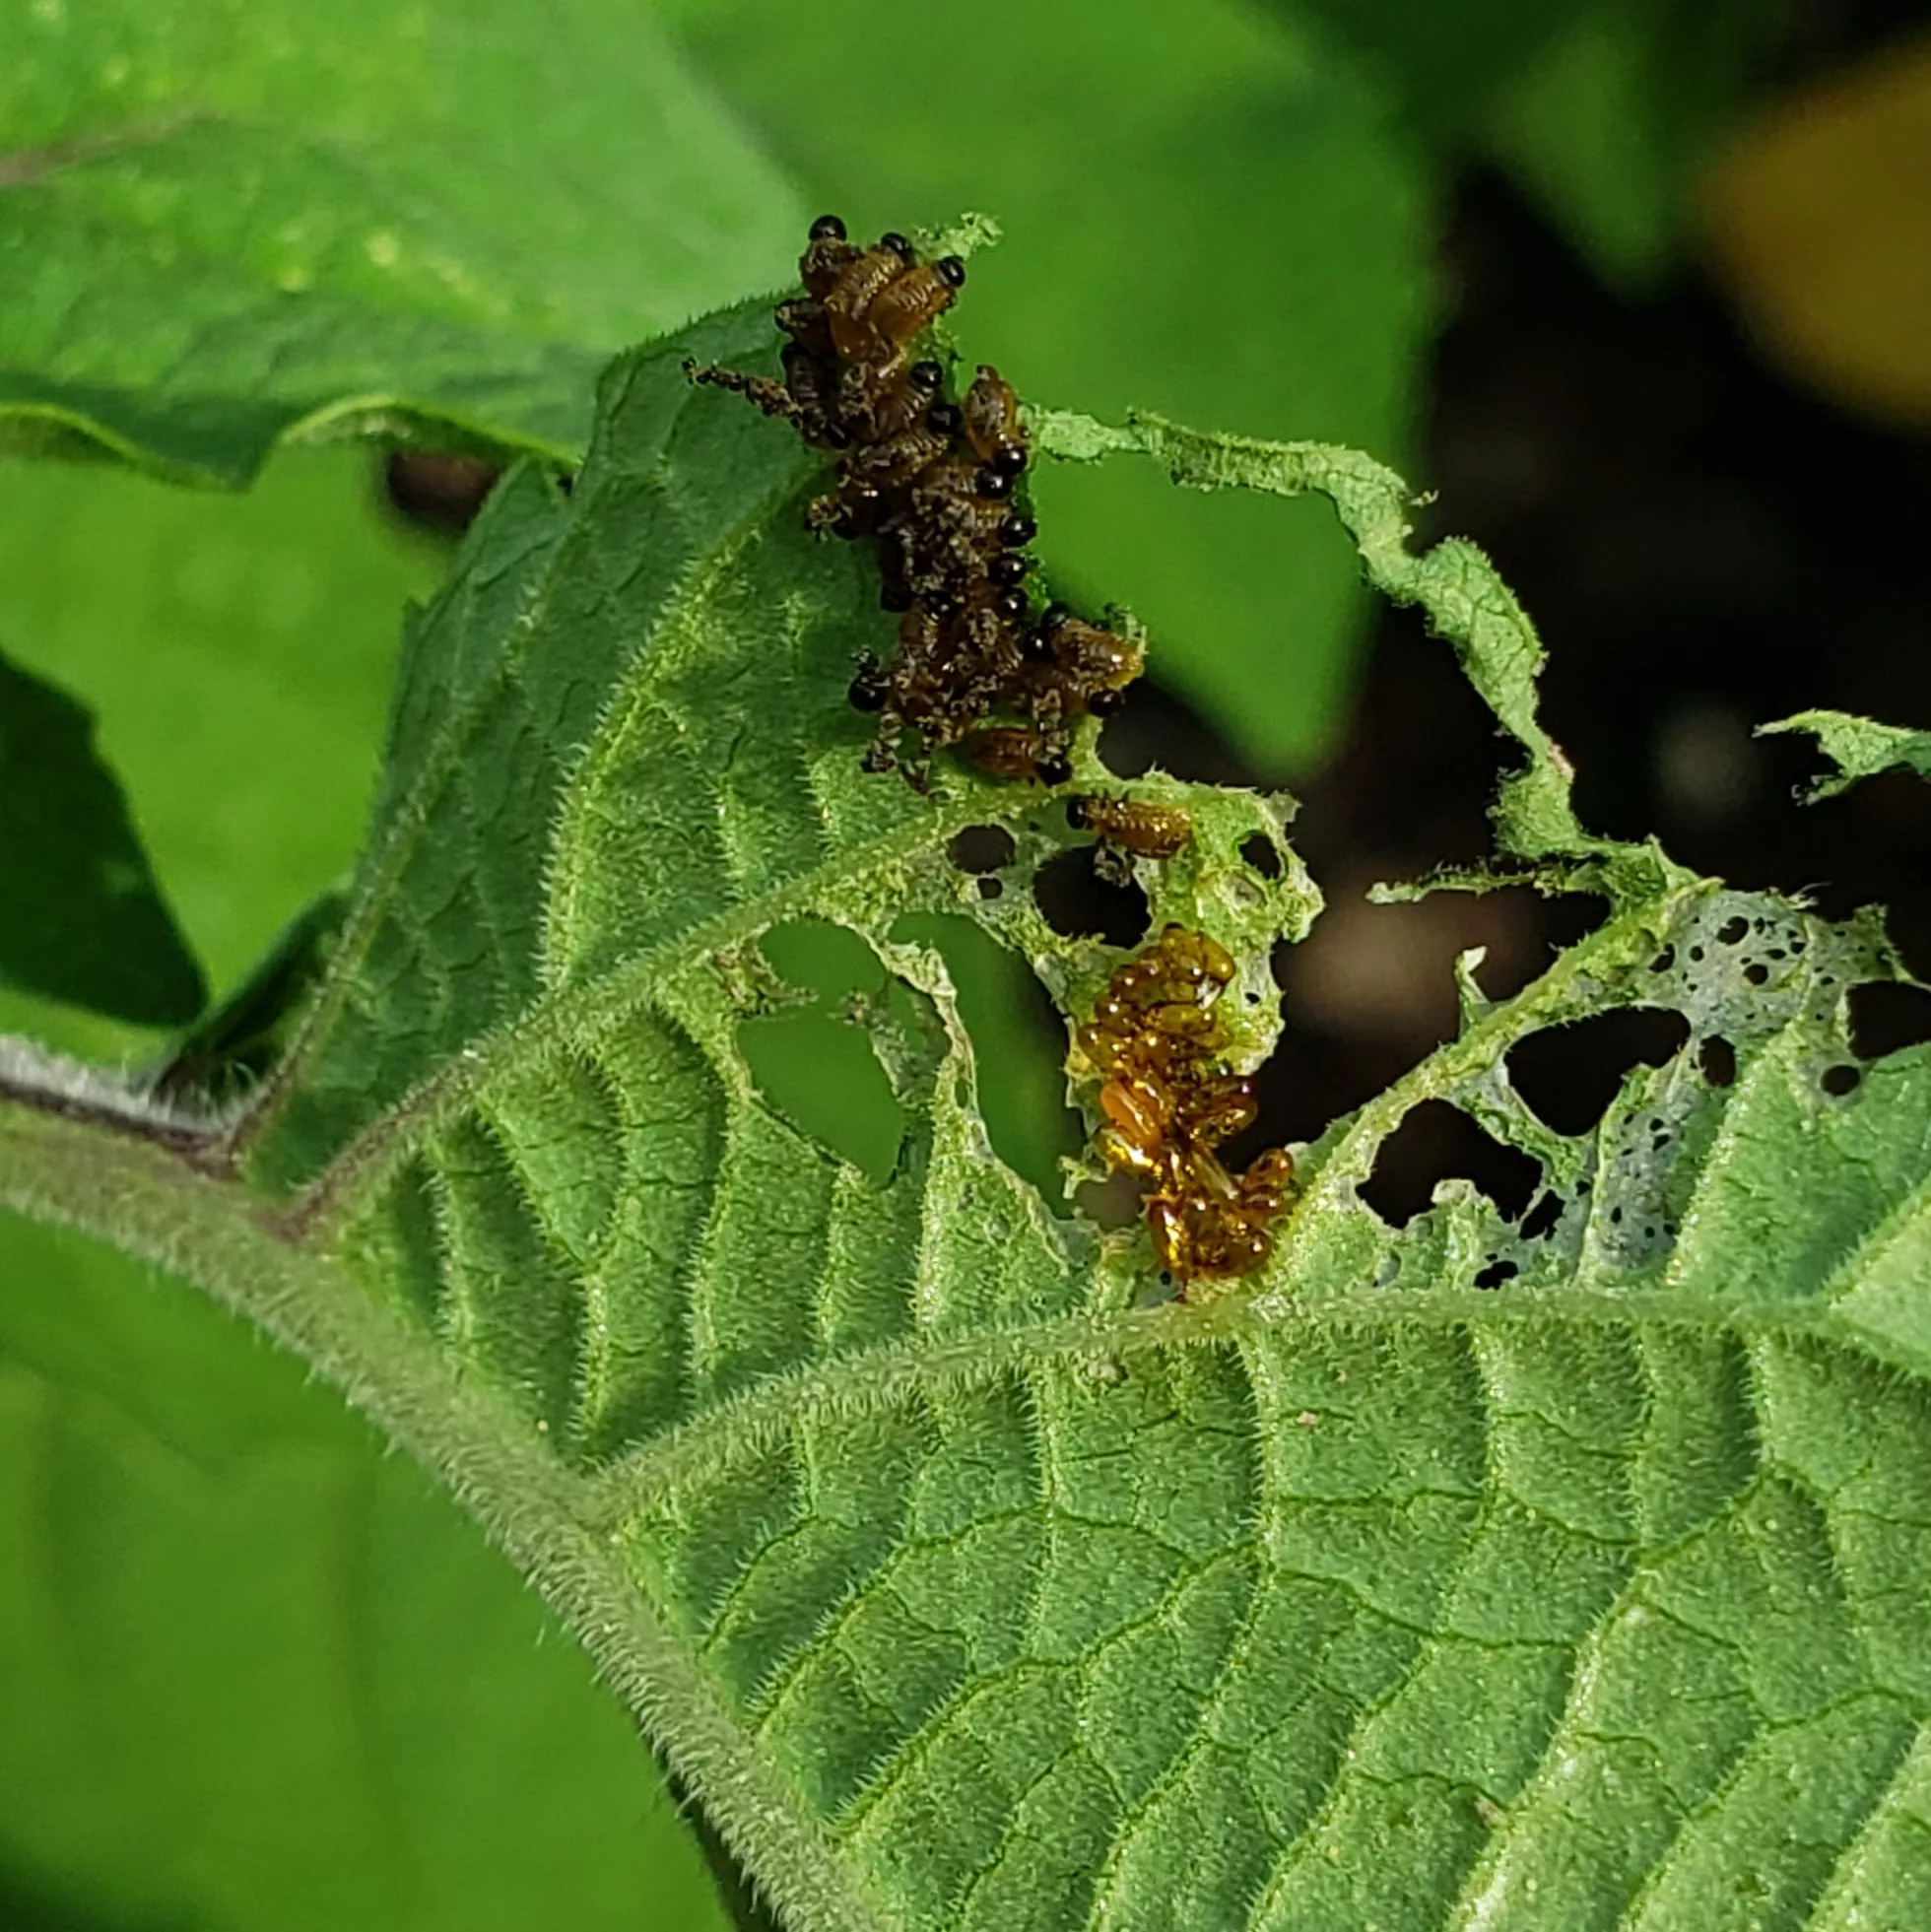 Colorado potato beetle larvae eating a ground cherry leaf